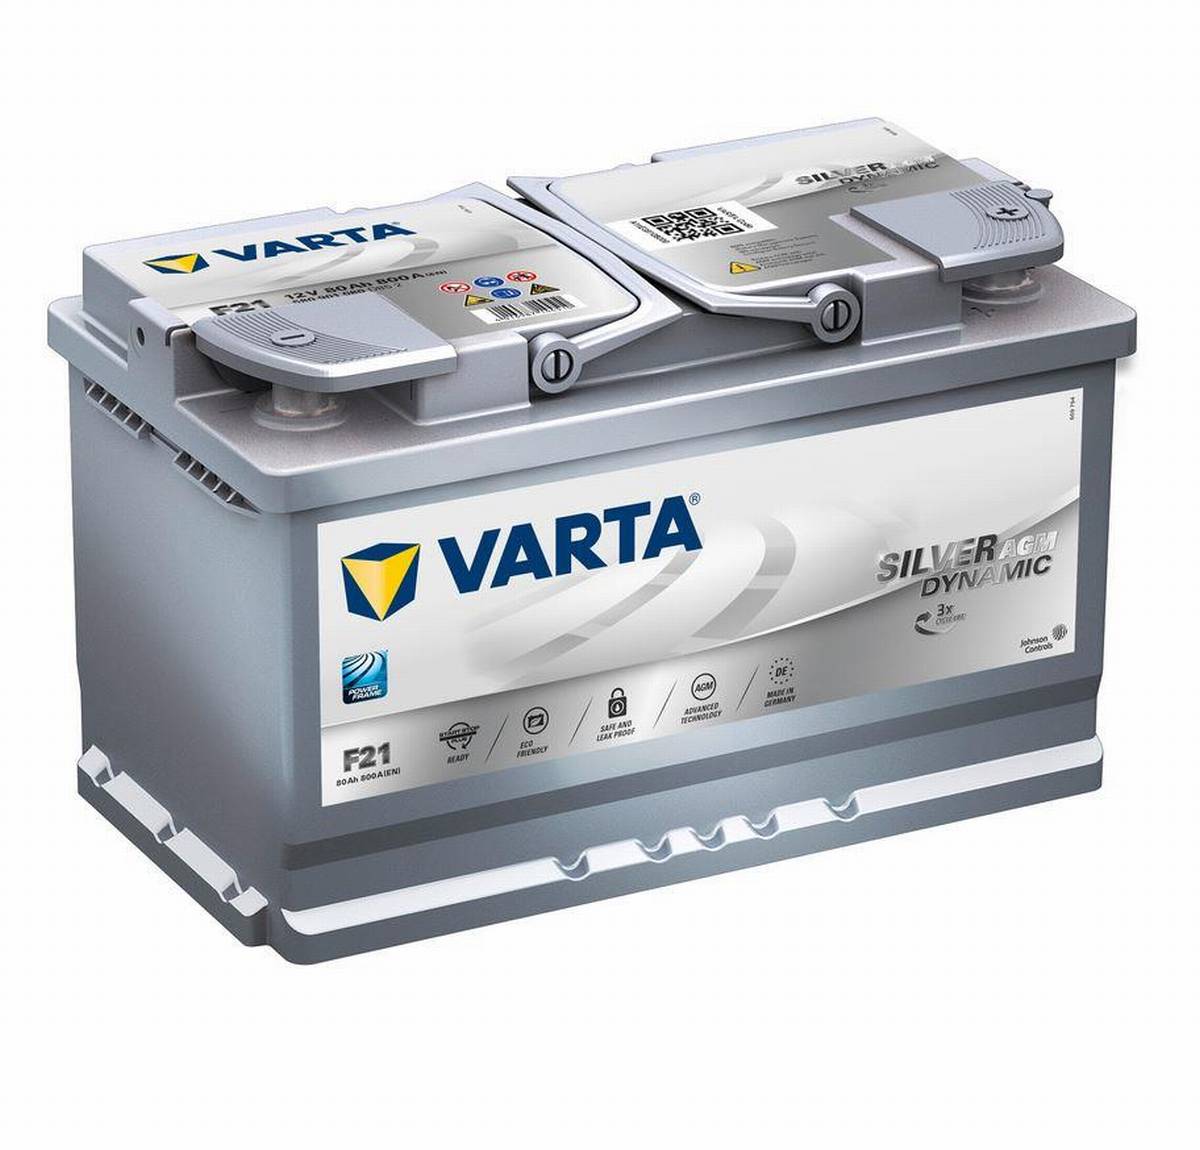 VARTA F21 Silver Dynamic AGM 12V 80Ah 800A Batteria auto Start-Stop 580 901 080